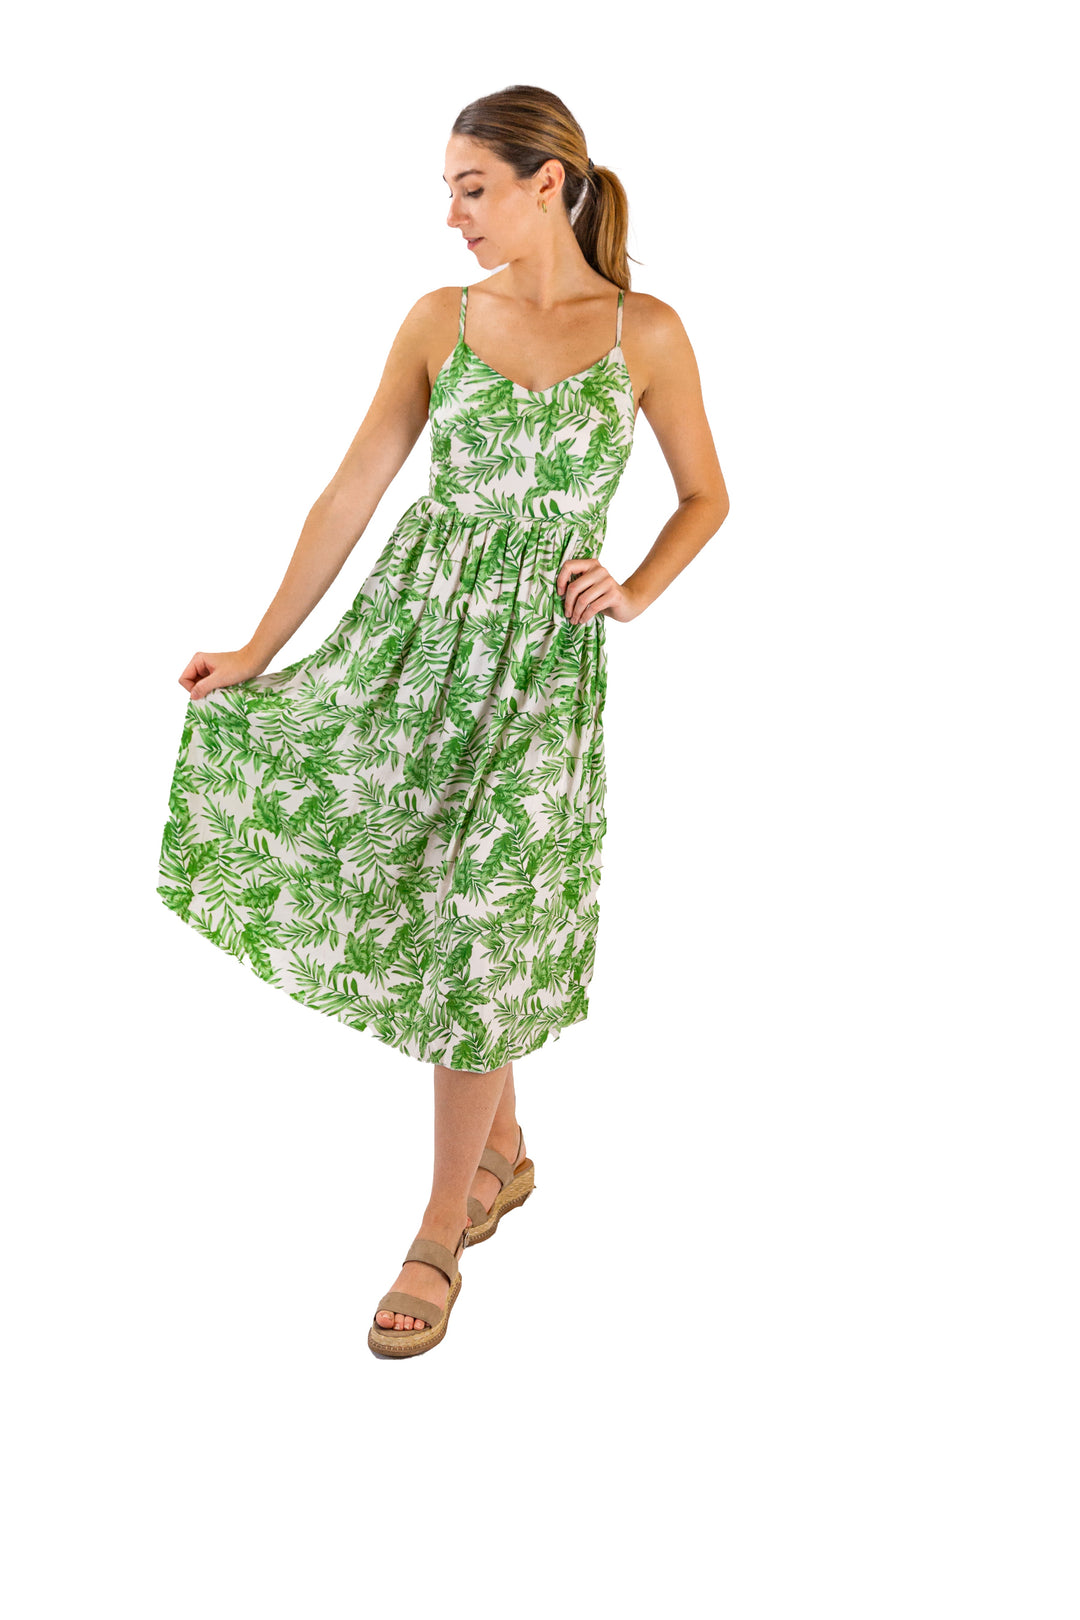 Fabonics Green Leaf Print Spaghetti Strap Chic Midi Dress for Women